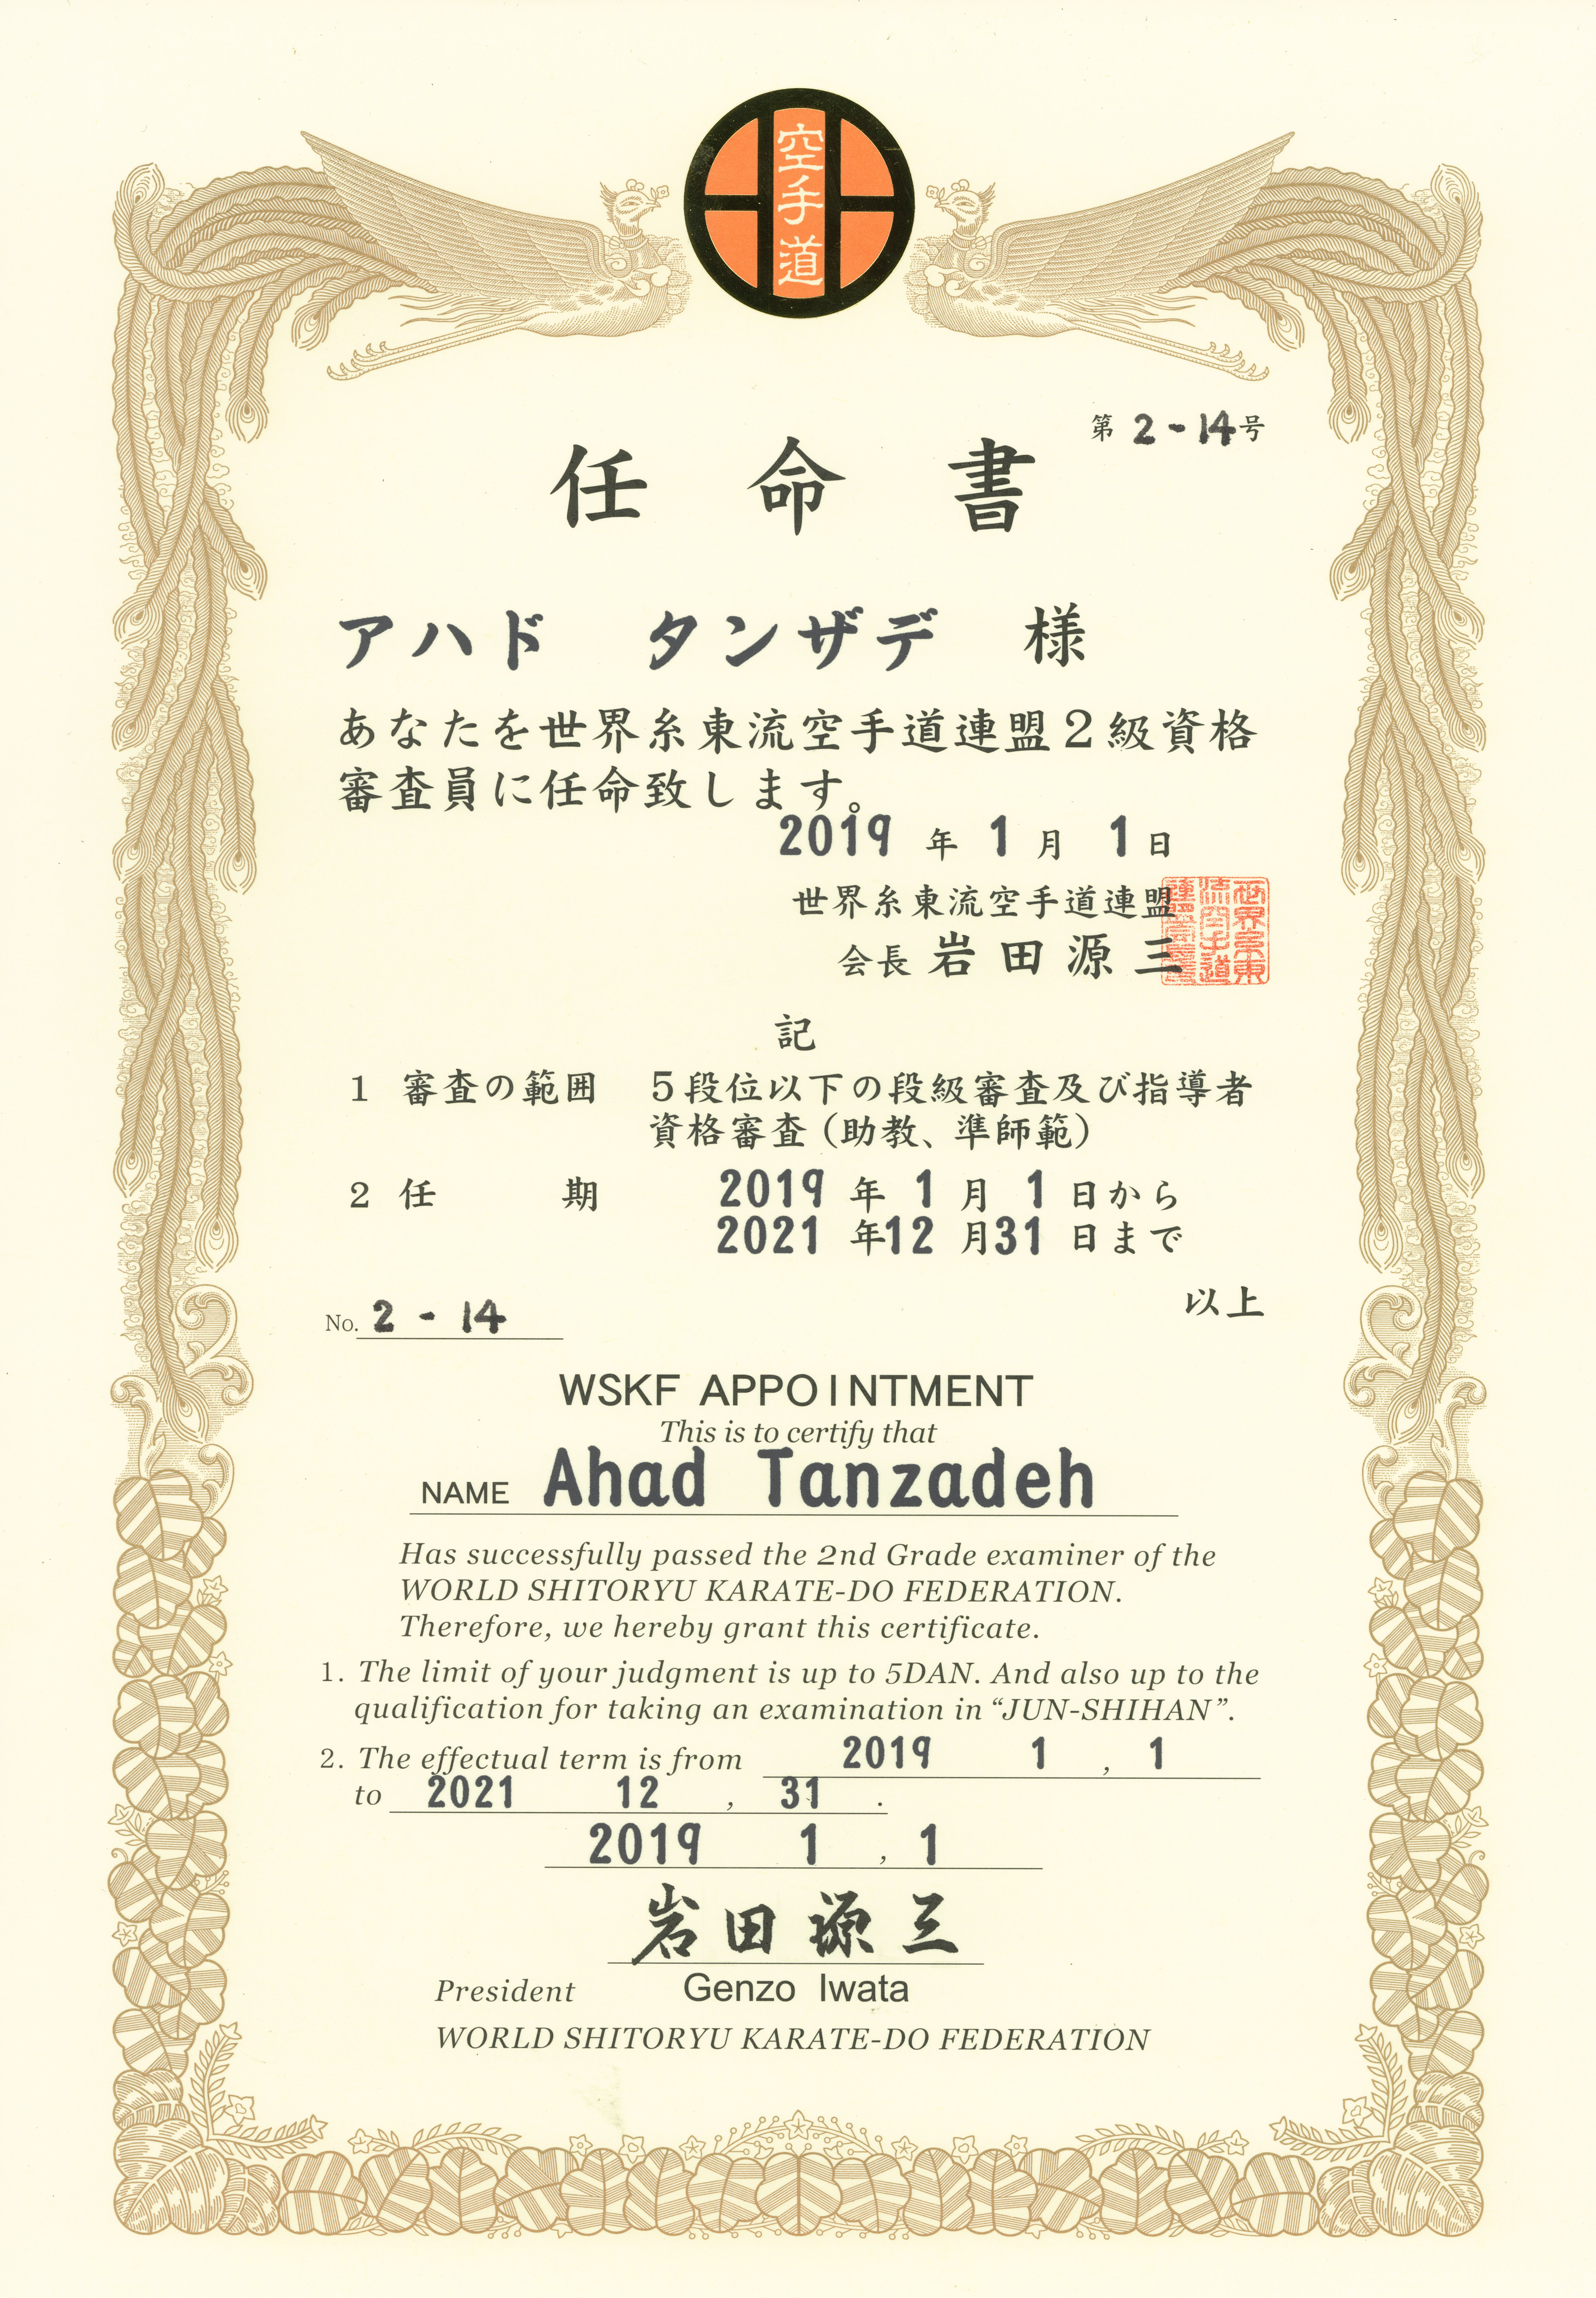 World Shitoryu Karate Federation 2nd degree examiner. Authorized to examine Dan level up to godan of the World Shitoryu karate Federation.